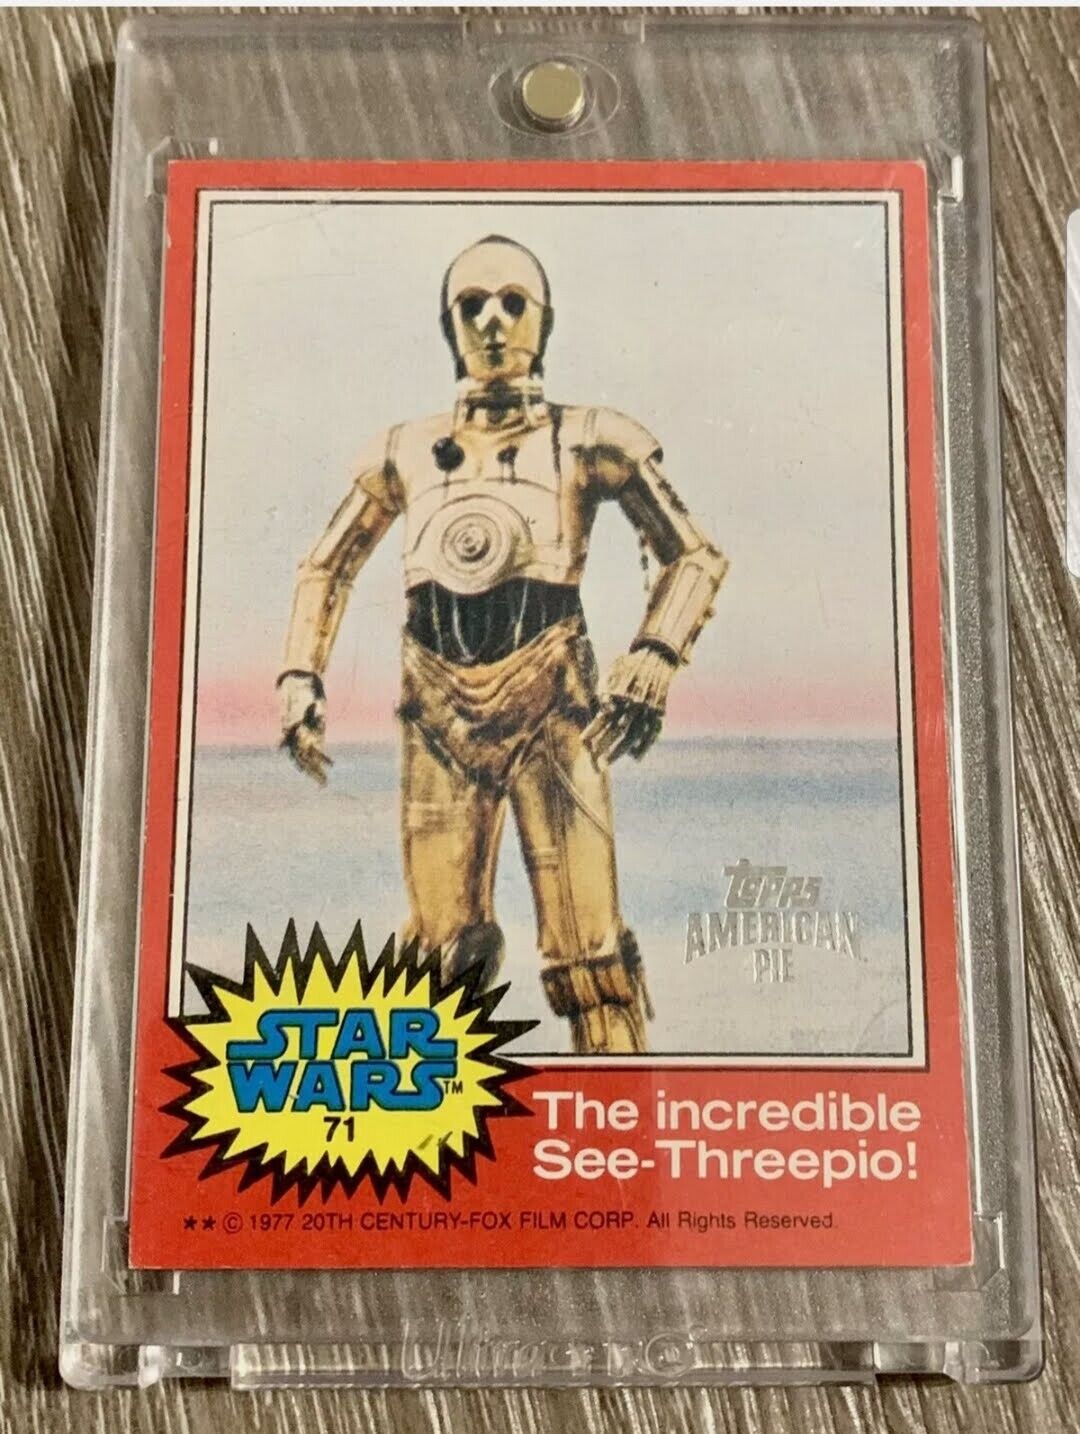 1977 Topps Star Wars card #71 rare American Pie BUYBACK 